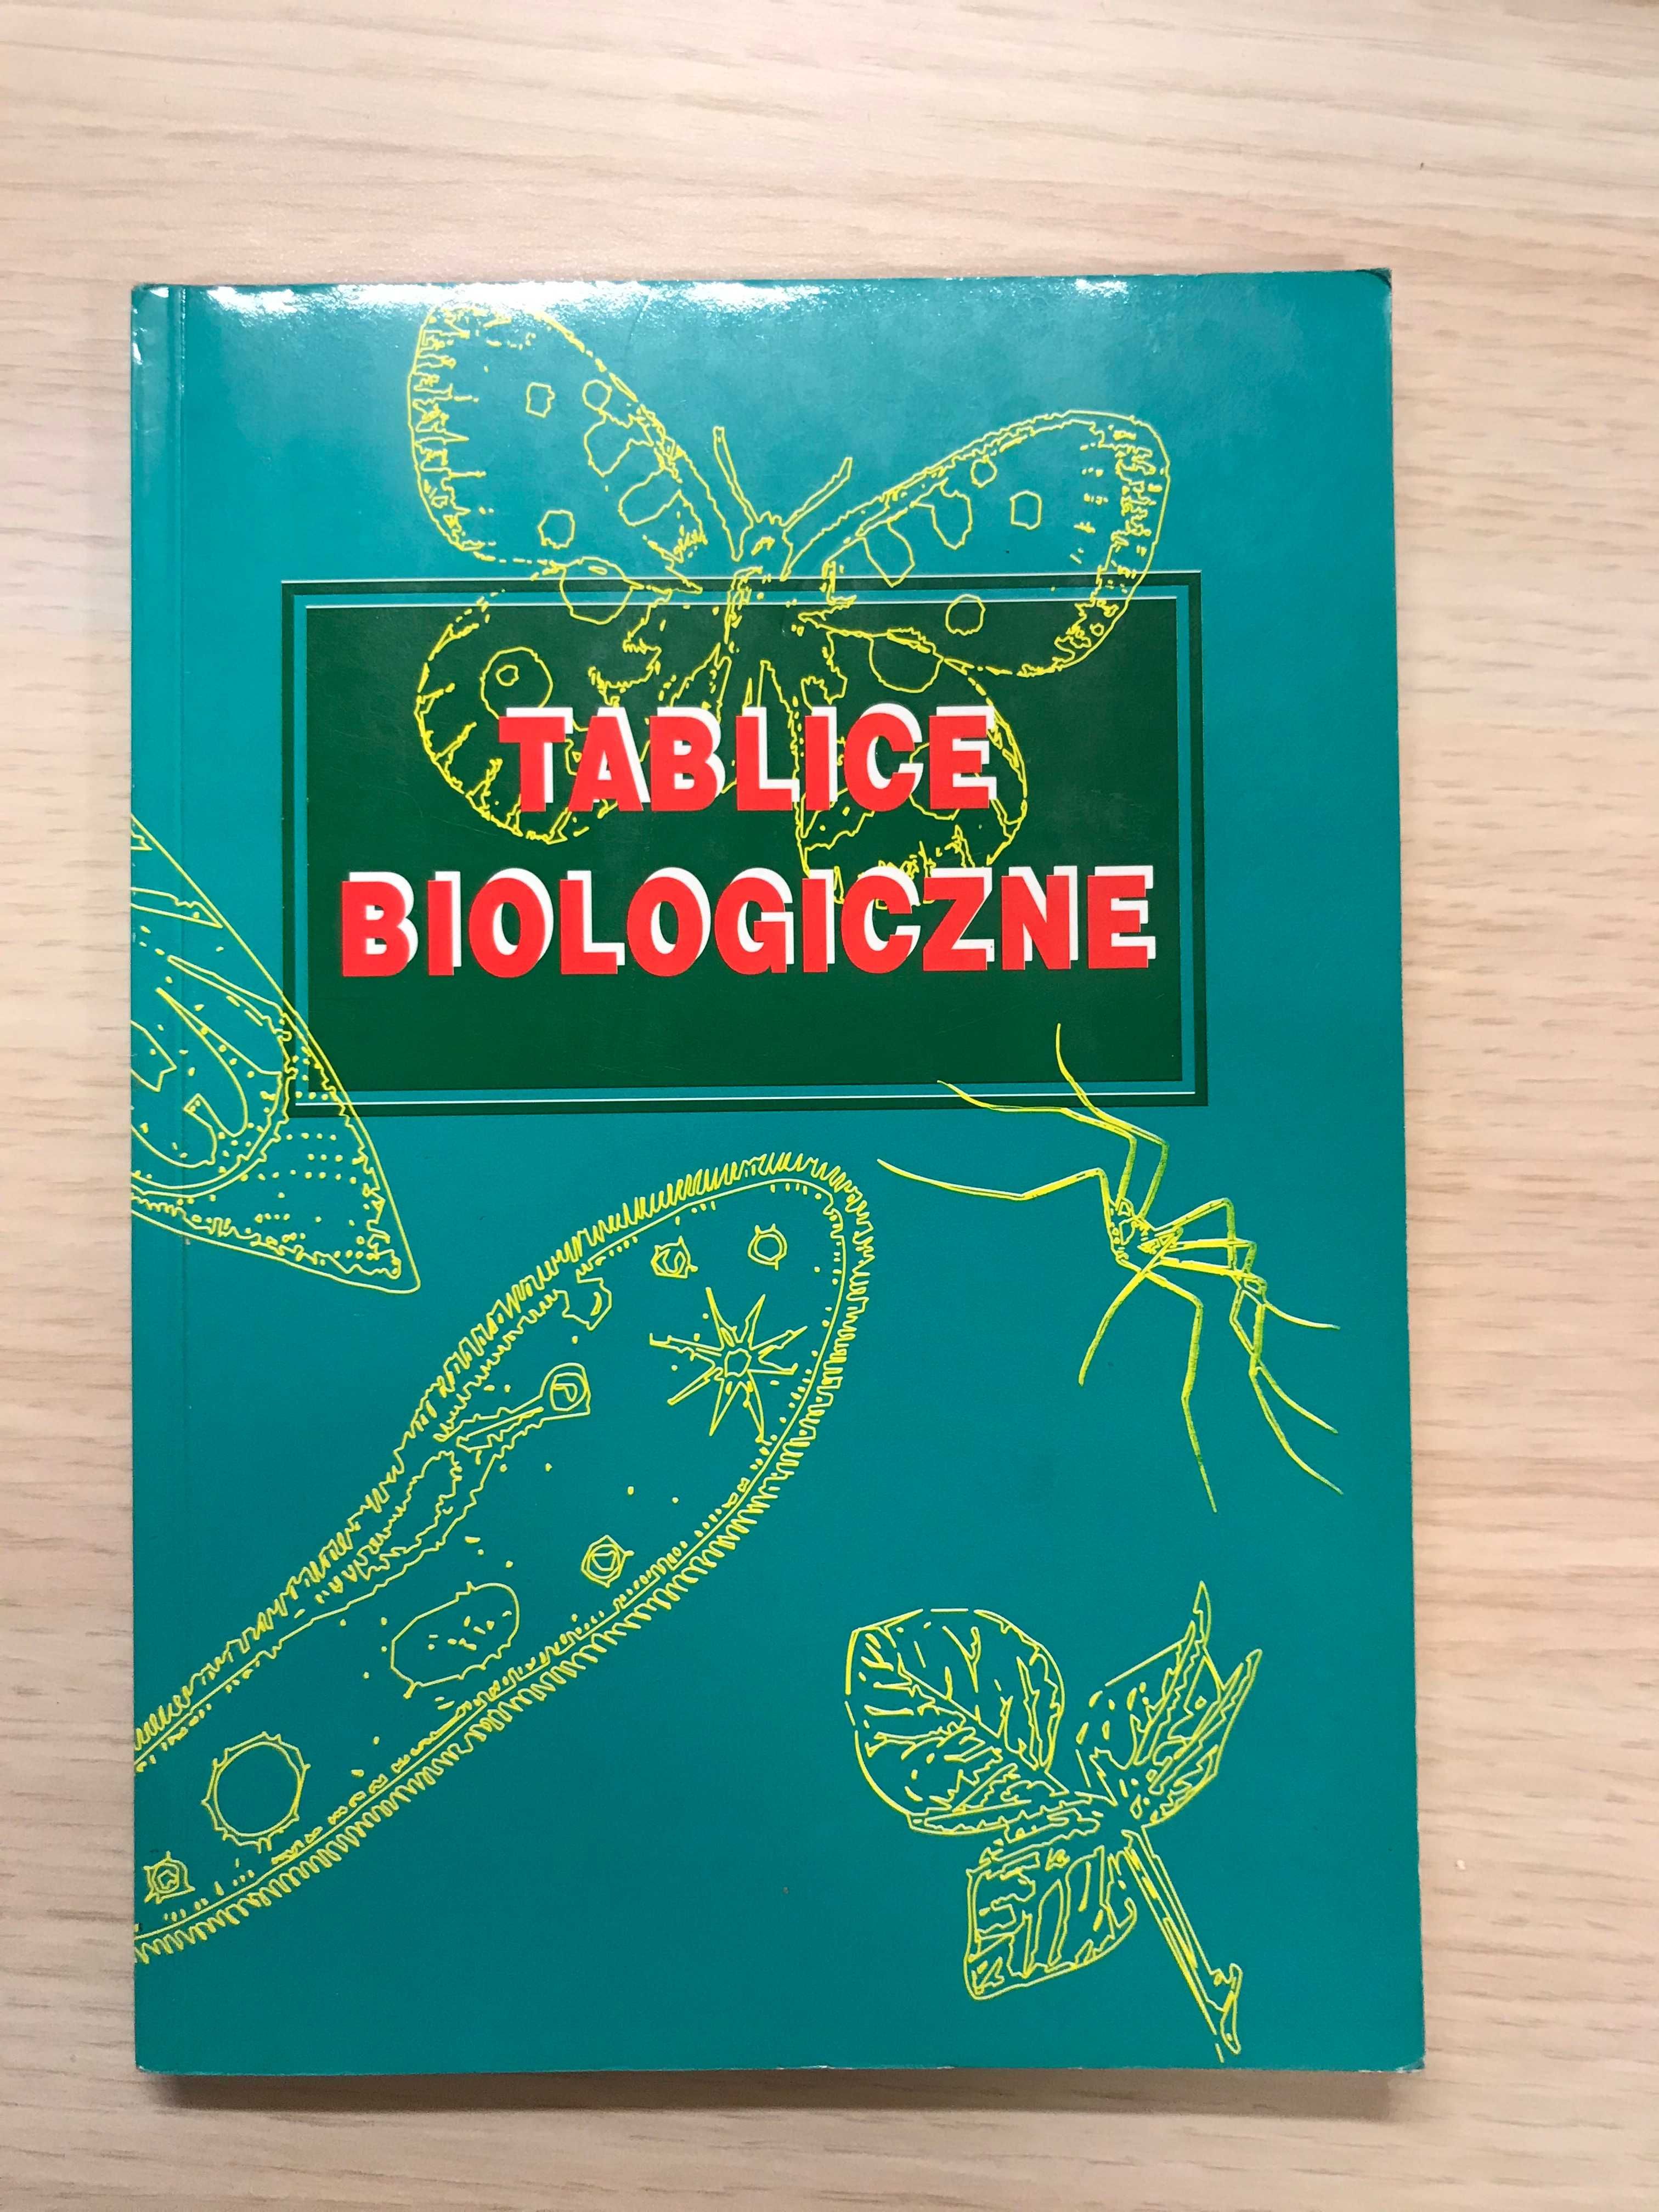 Tablice Biologiczne - kompendium matura rozszerzona biologia studia